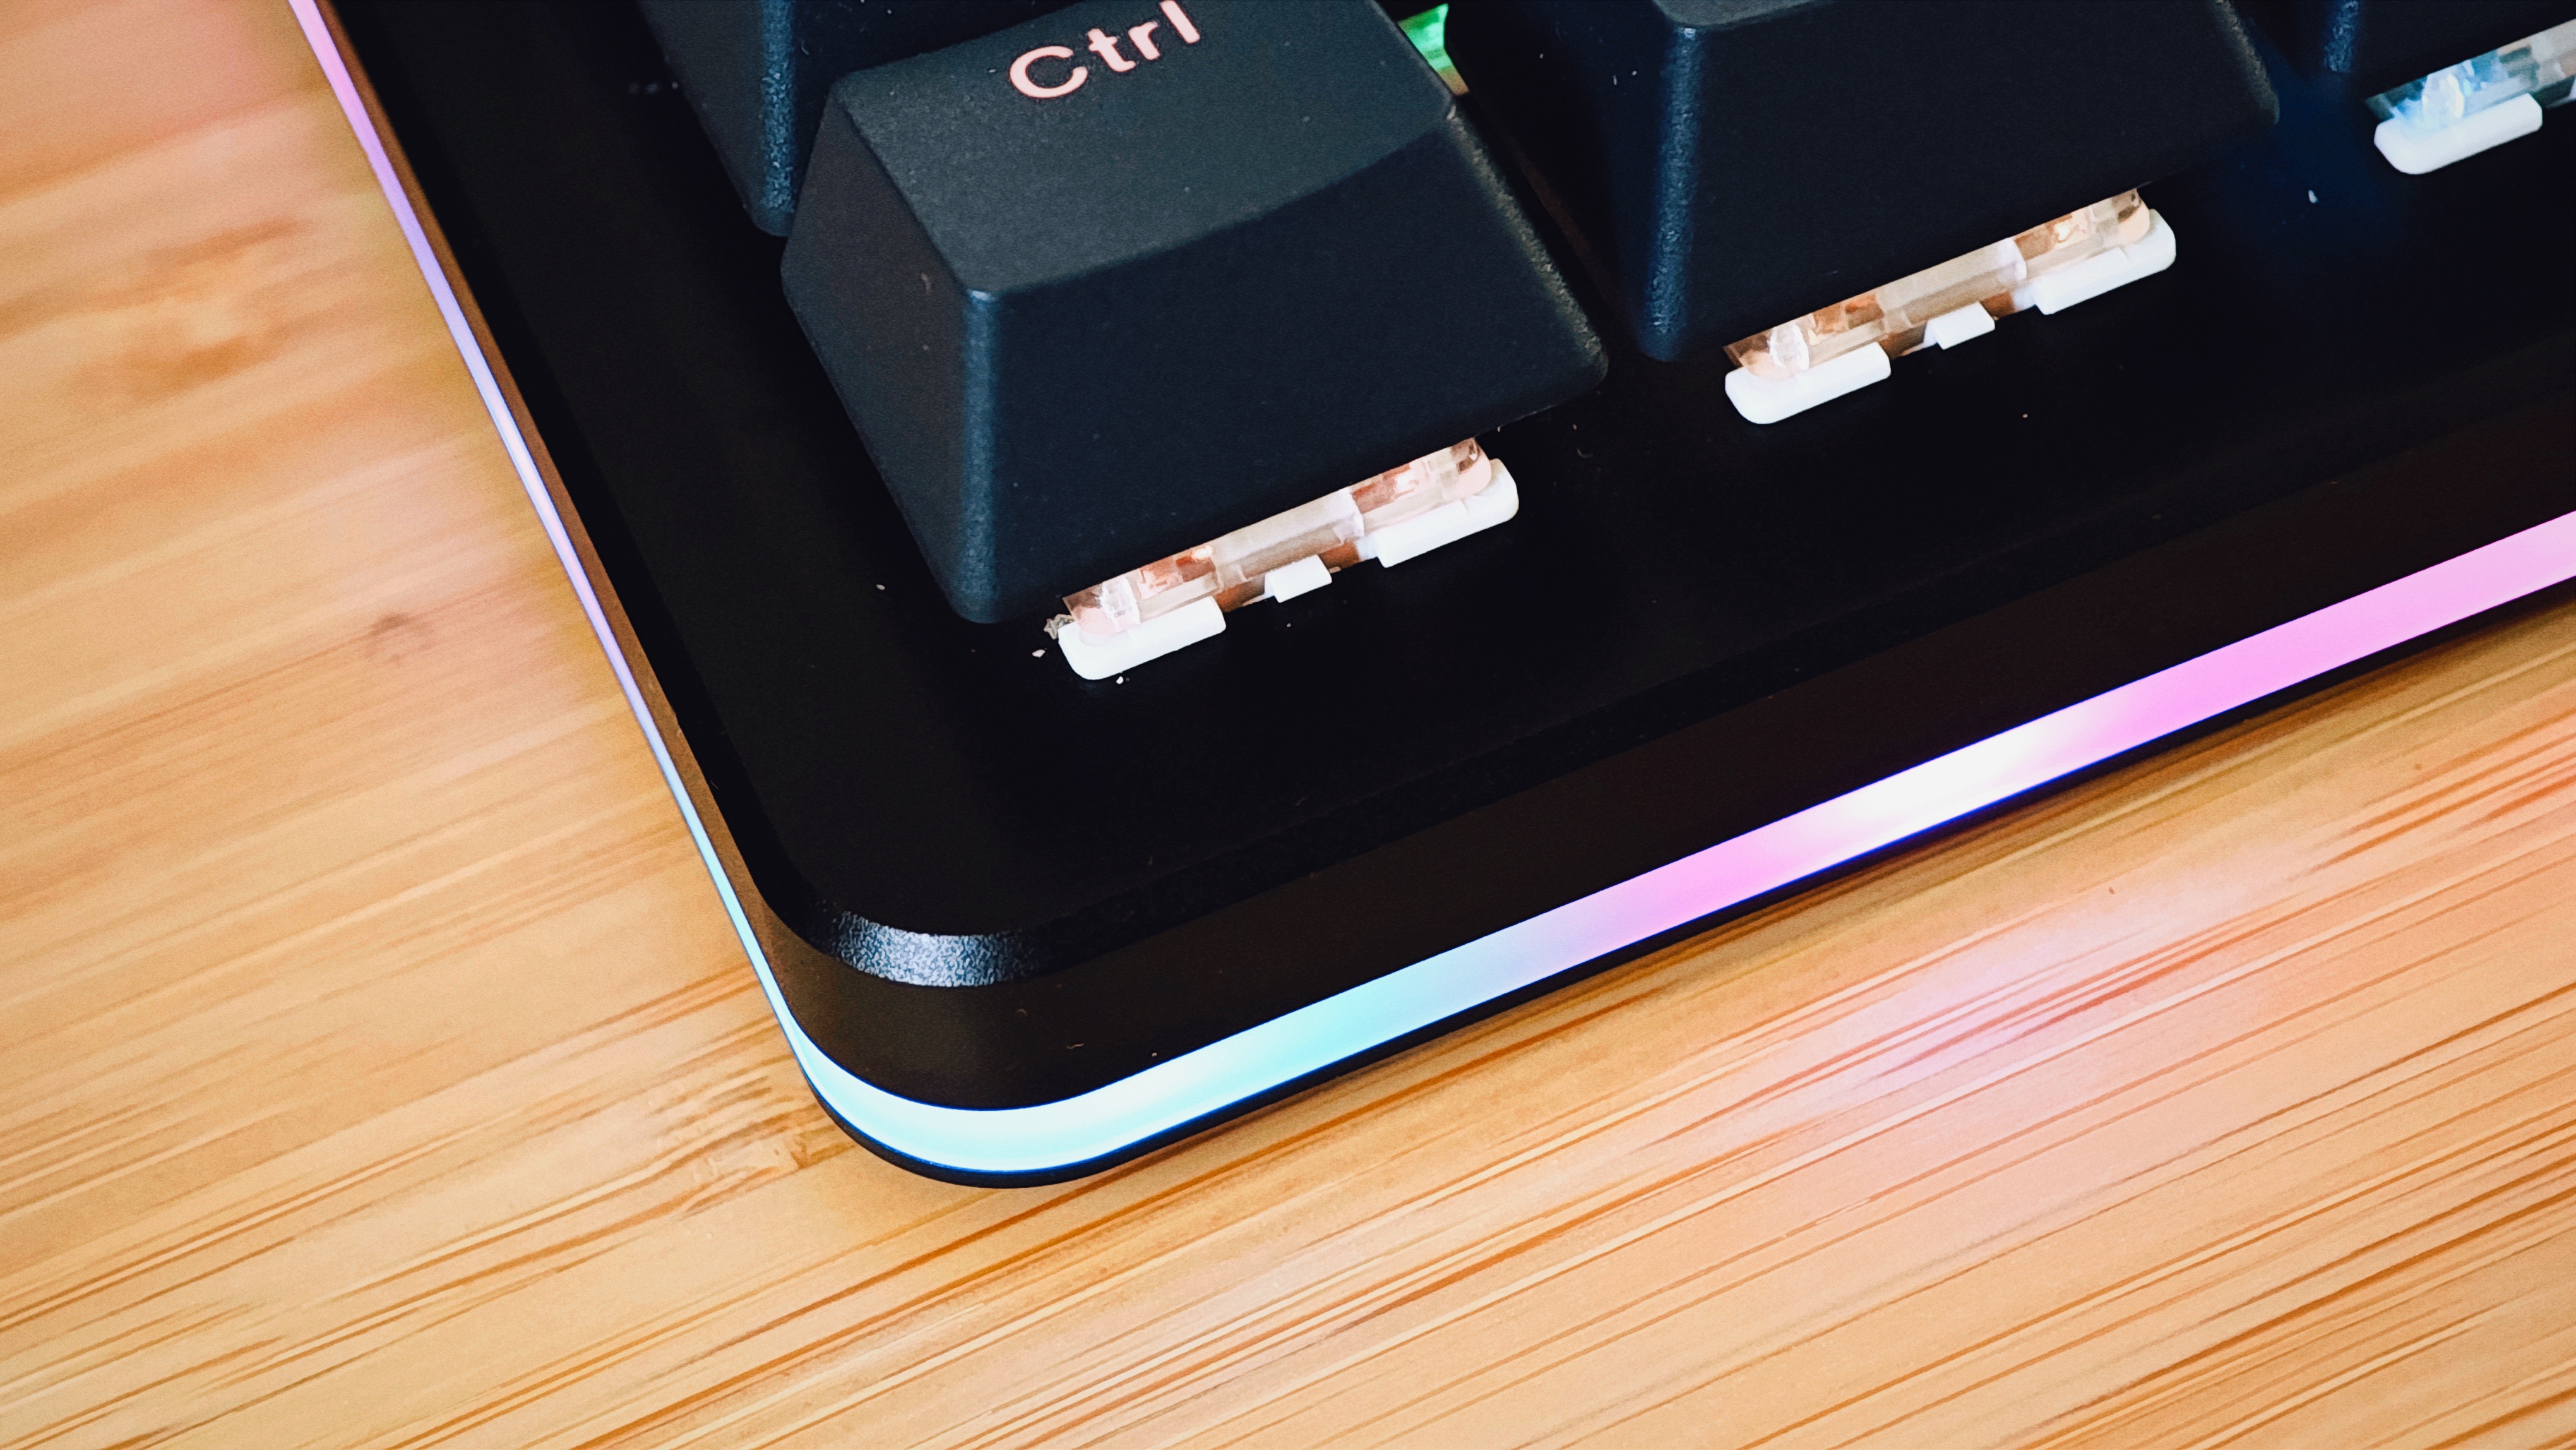 A black Drop CTRL V2 keyboard on a wooden desk